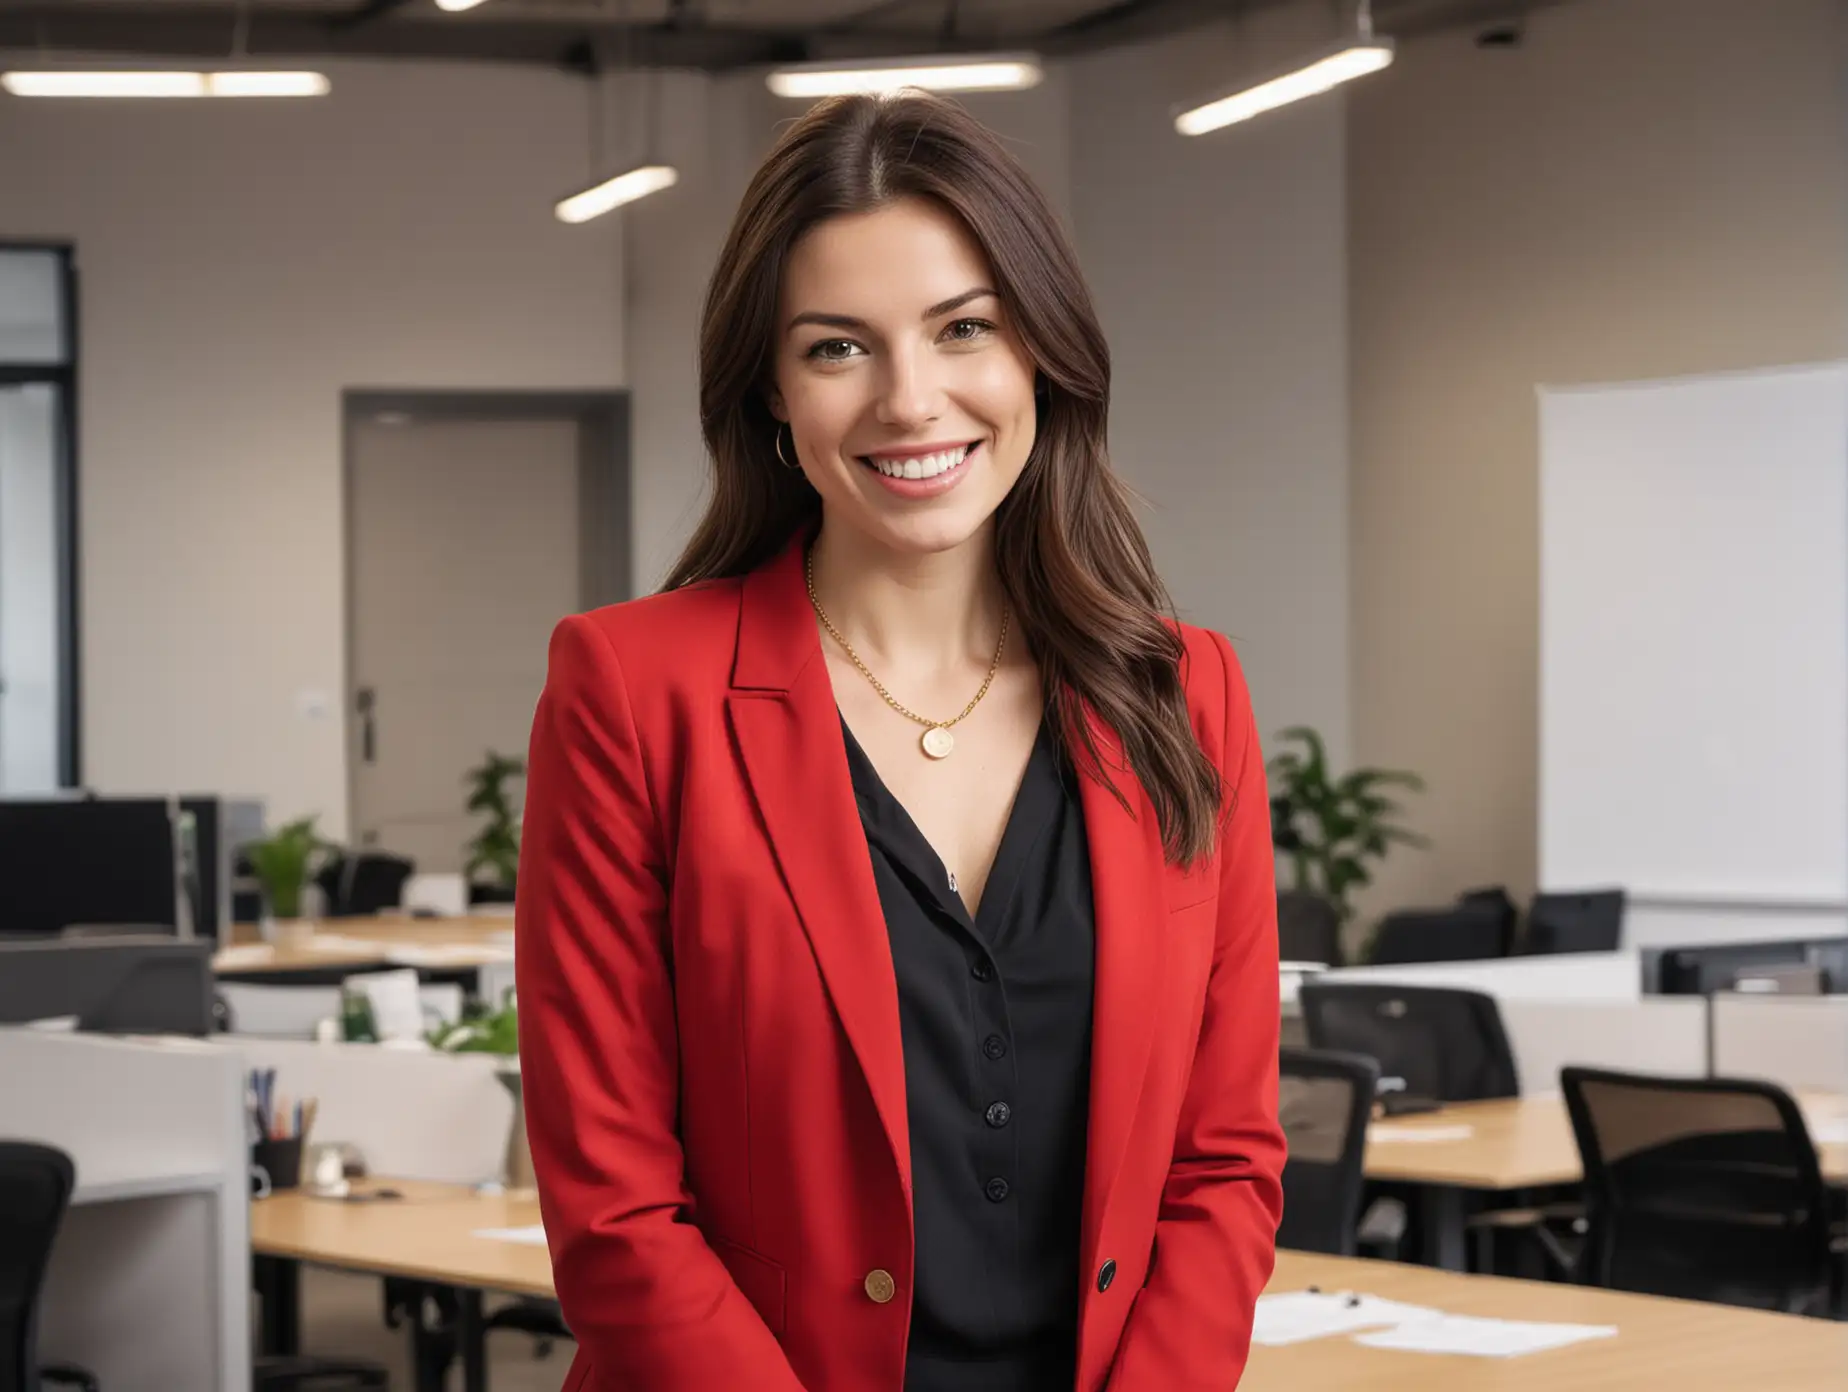 Smiling Businesswoman in Red Blazer Office Portrait